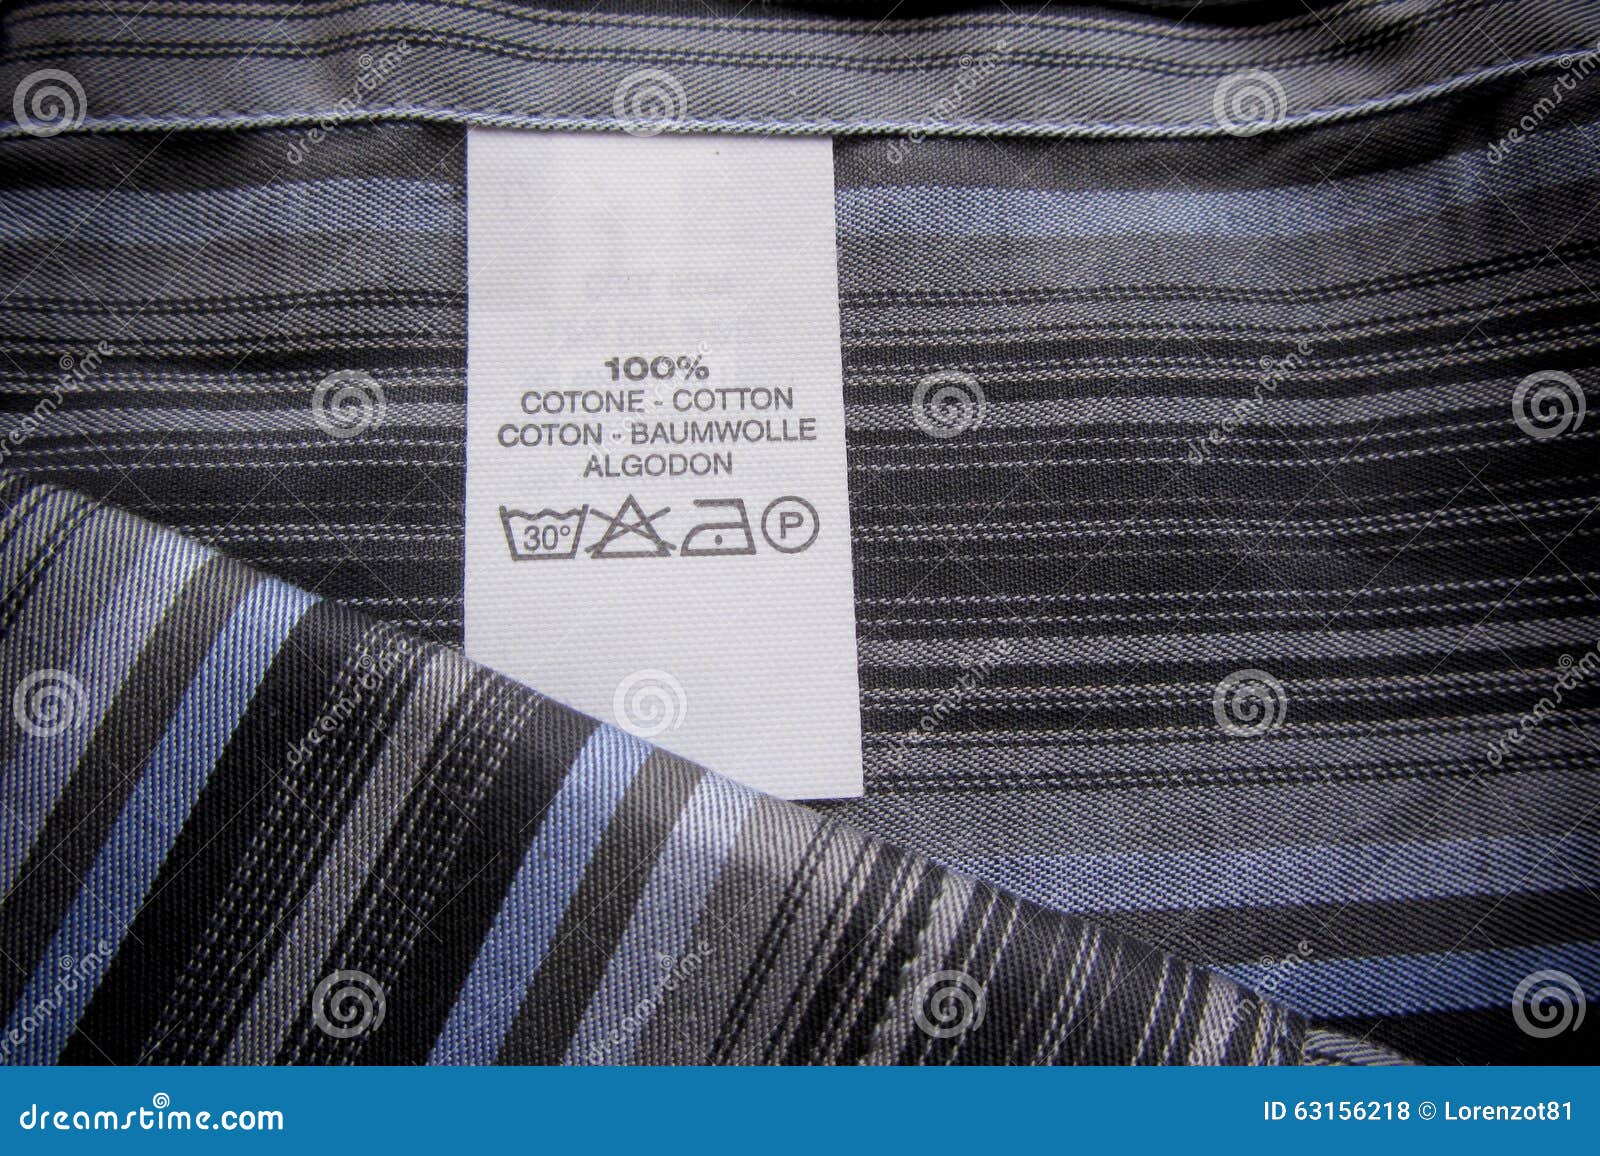 Washing Instruction Label on Cotton Vertical Stripes Shirt Stock Photo ...